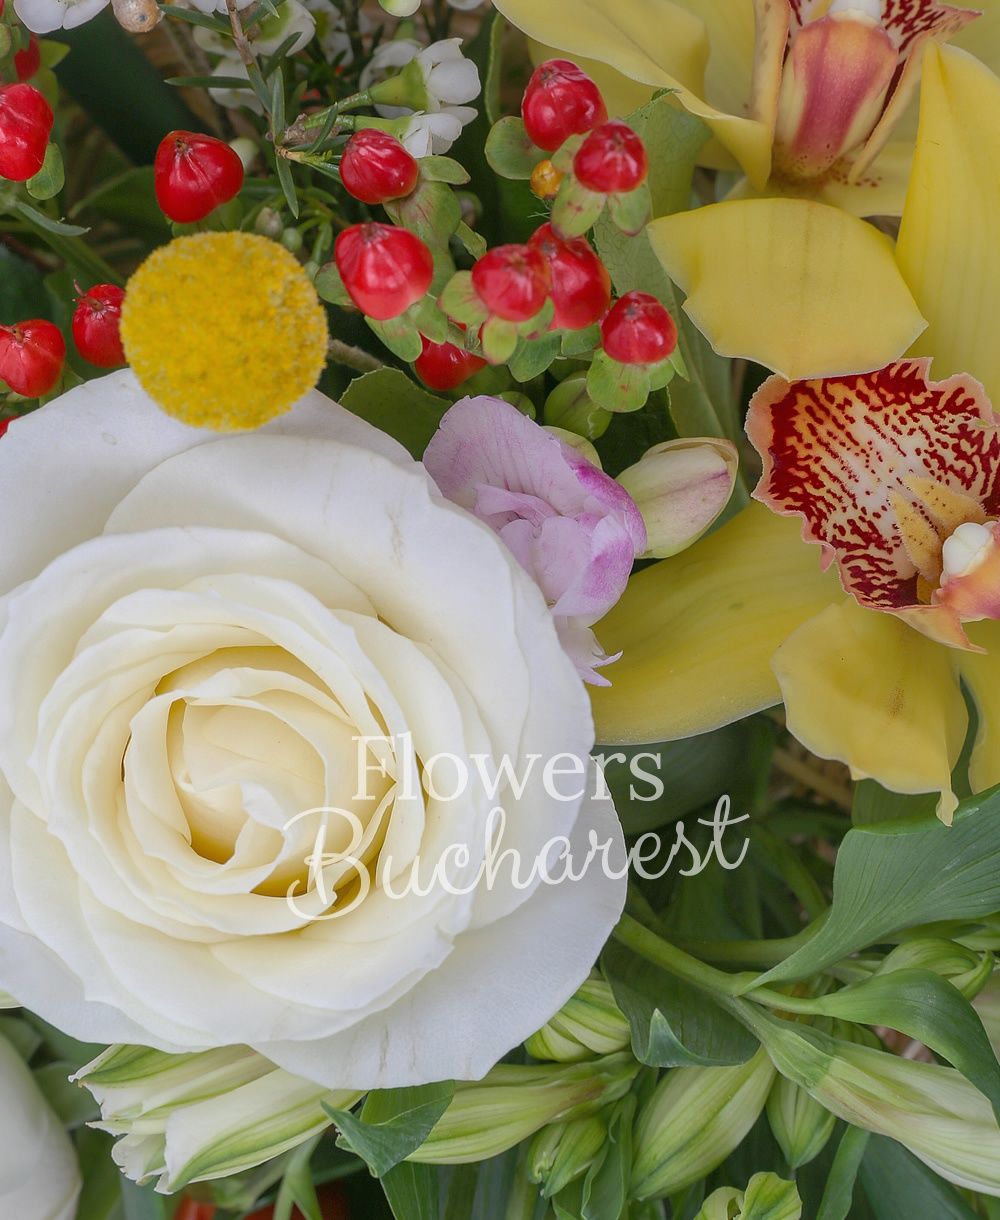 3 white roses, 3 white alstroemeria, 5 red tulips, 3 red hypericum, 5 white freesias, yellow cymbidium, 3 yellow craspedia, greenery